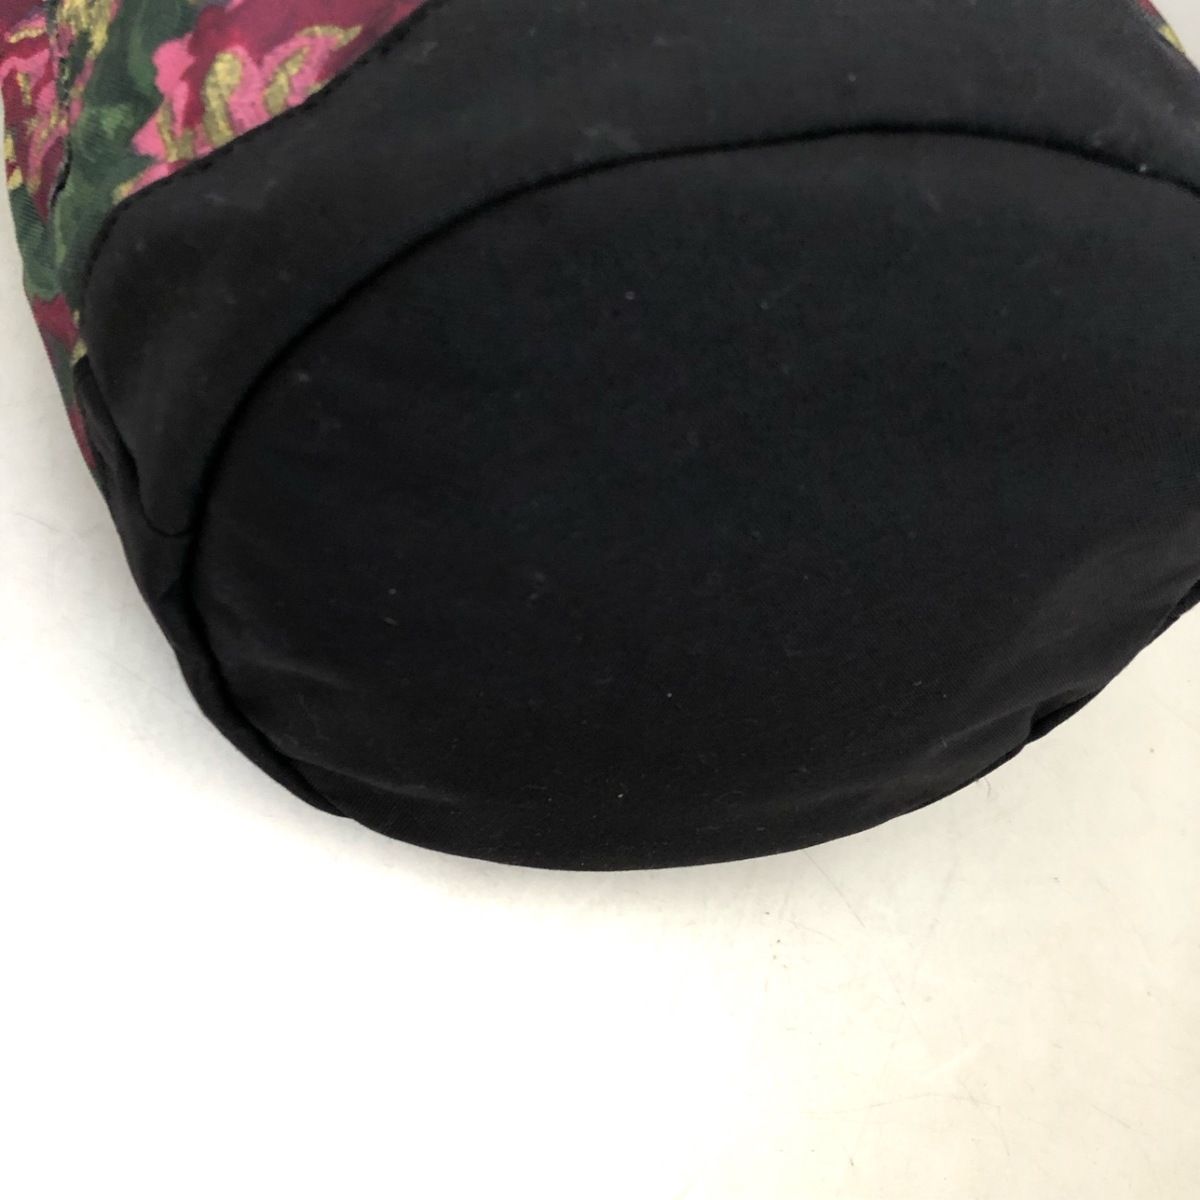 GREGORY(グレゴリー) トートバッグ美品 - 黒×ダークグリーン×マルチ 花柄/巾着型 ナイロン